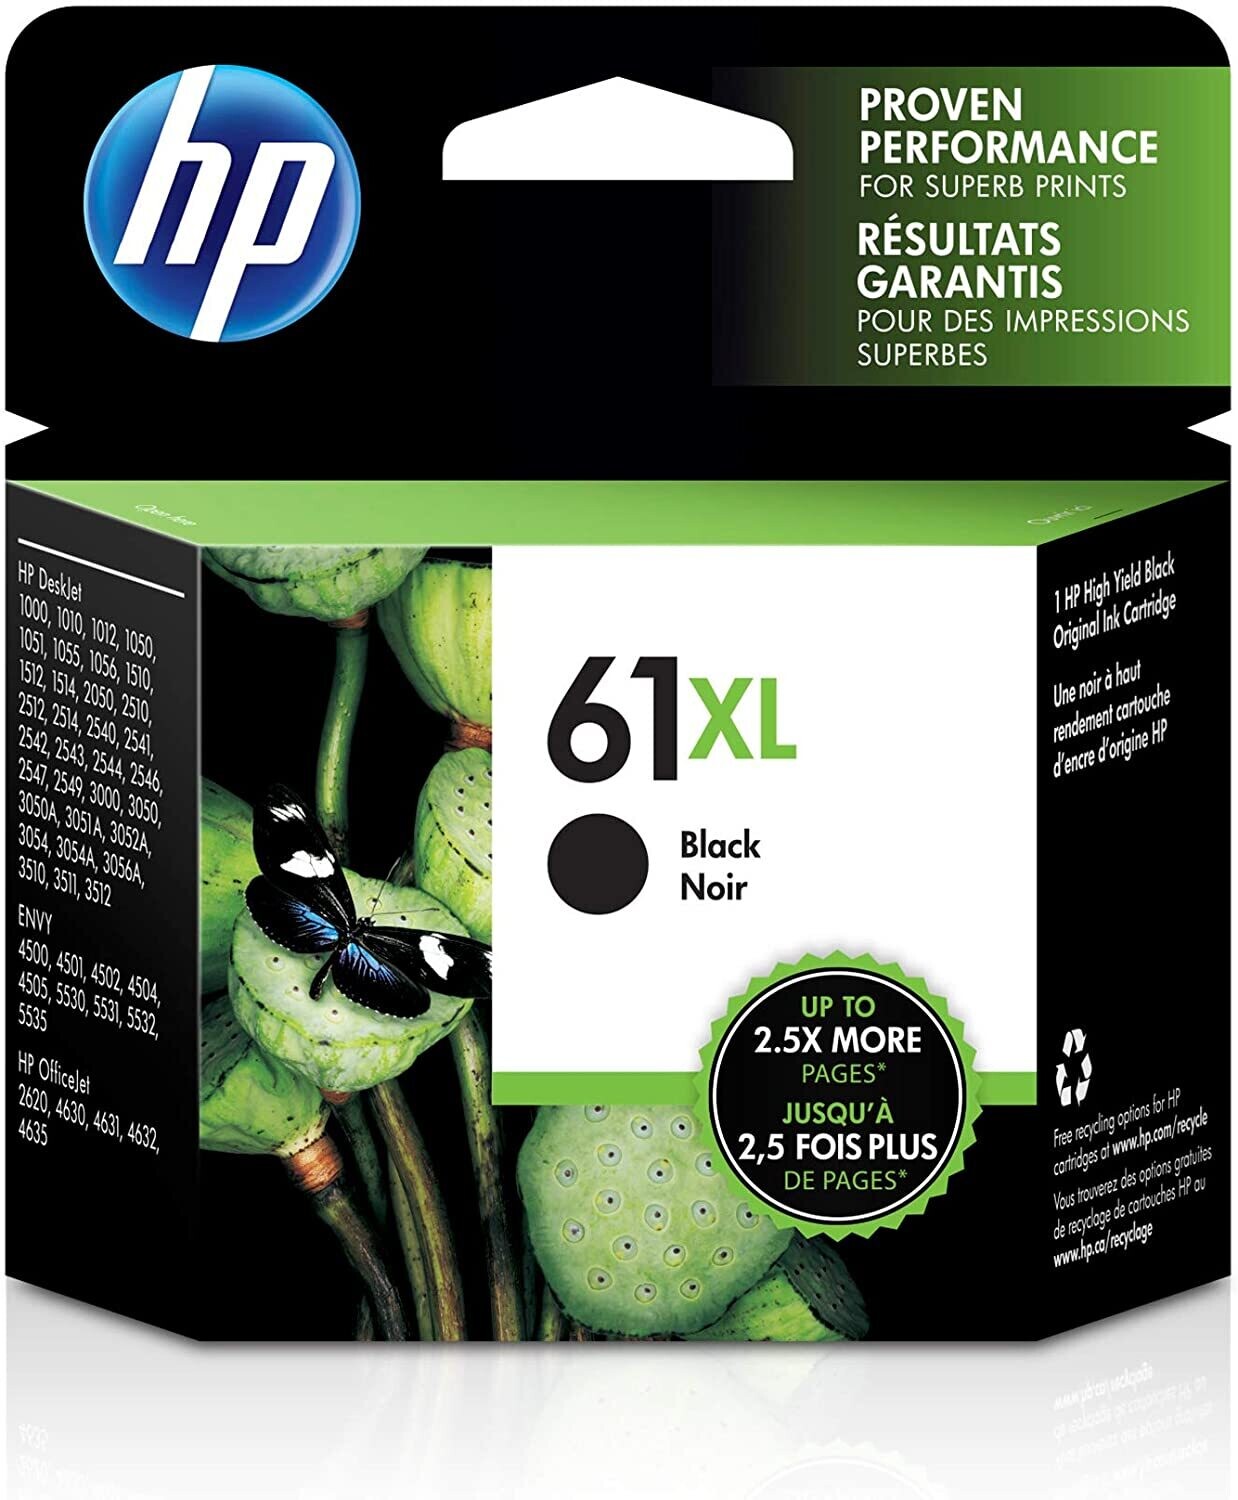 HP 61XL Black Ink Jet Cartridges